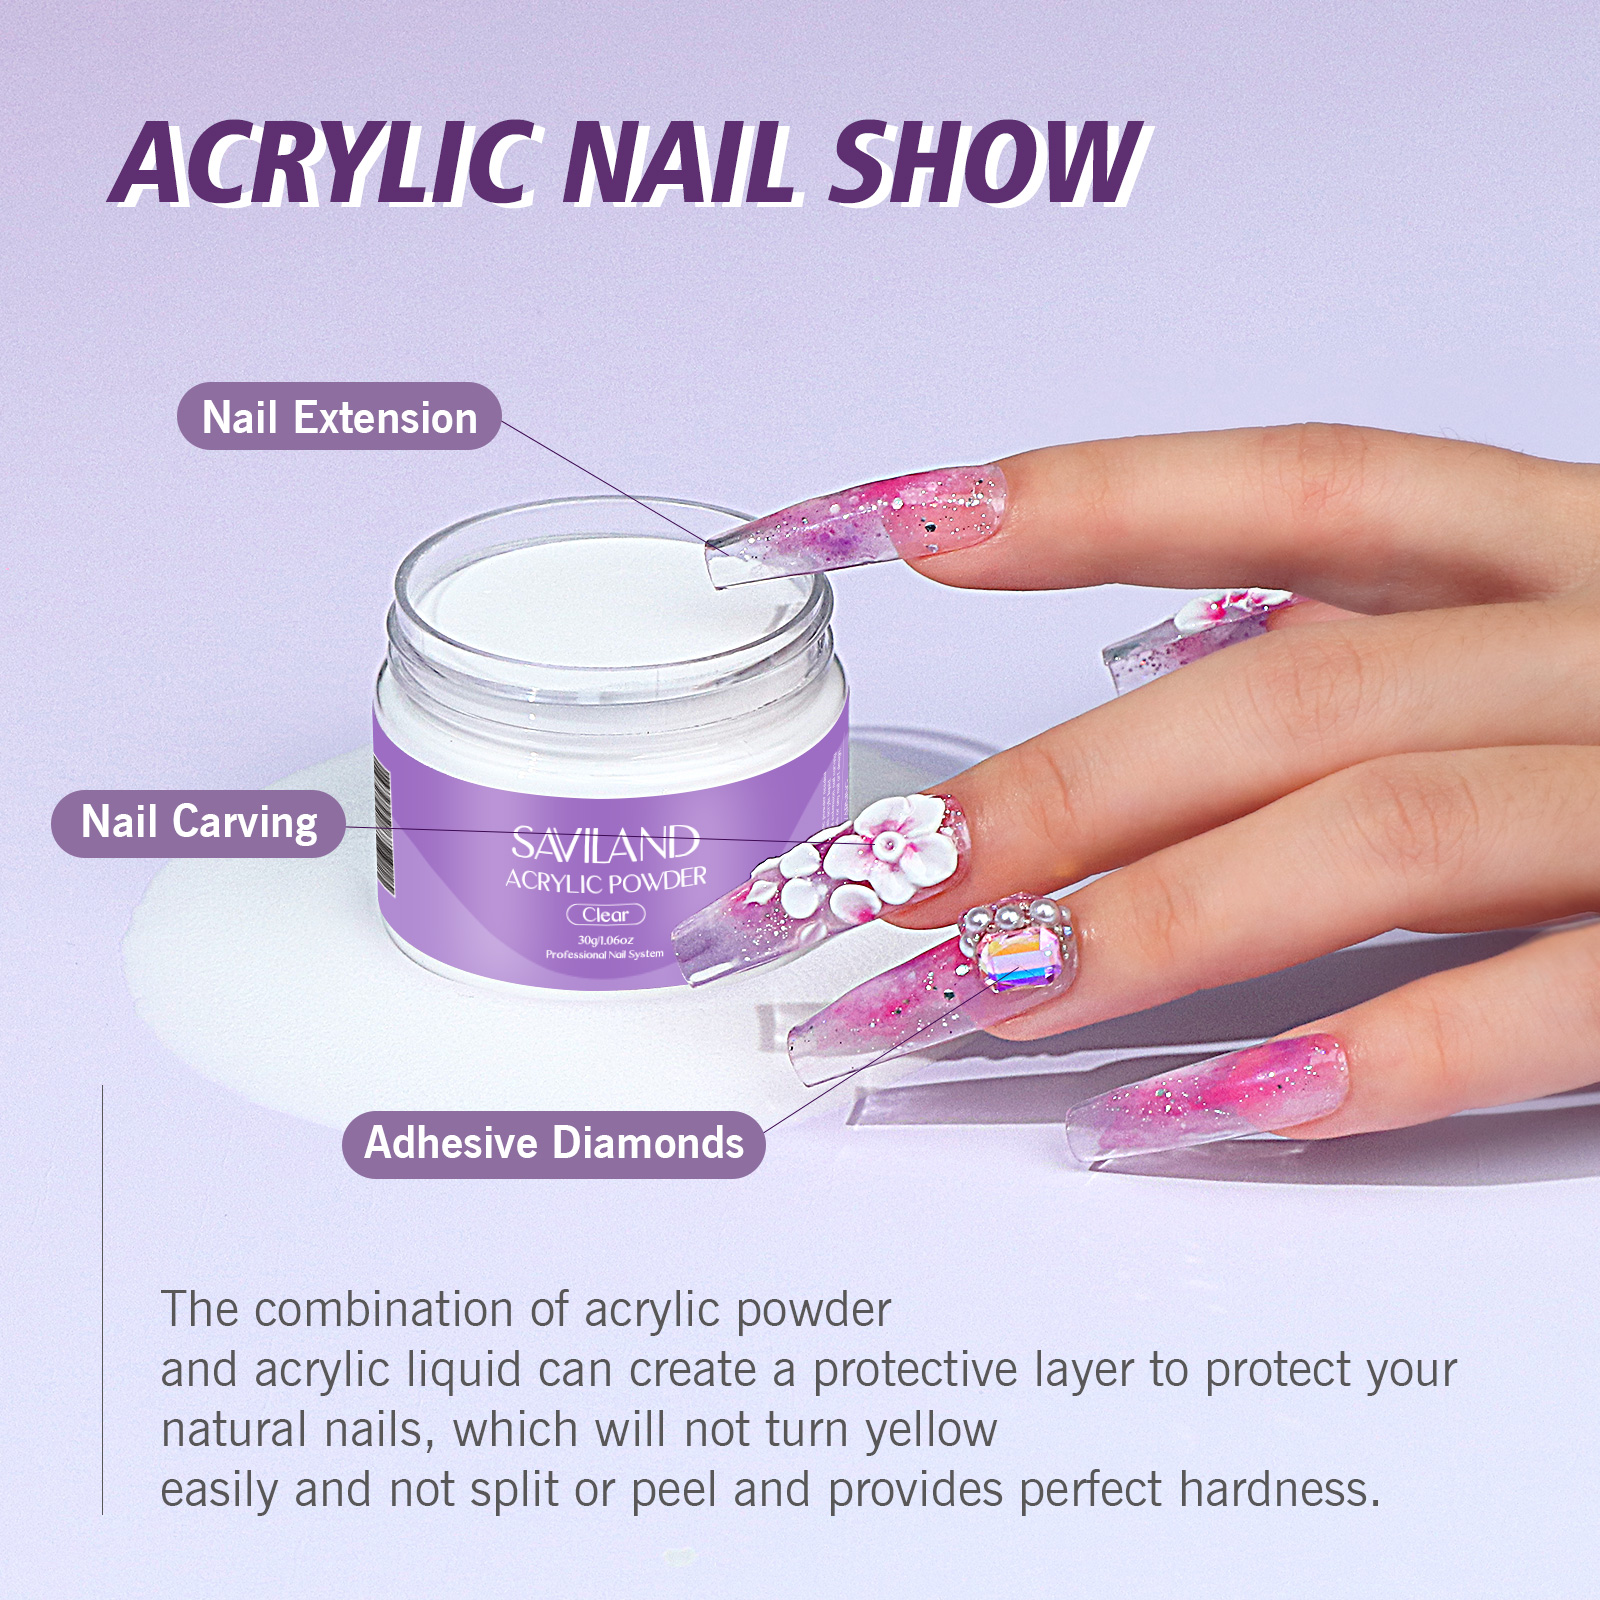 Saviland Acrylic Nail Kit - Clear Acrylic Powder and Acrylic Liquid Set with Acrylic Nail Brush Nail Forms for Beginners - image 4 of 8